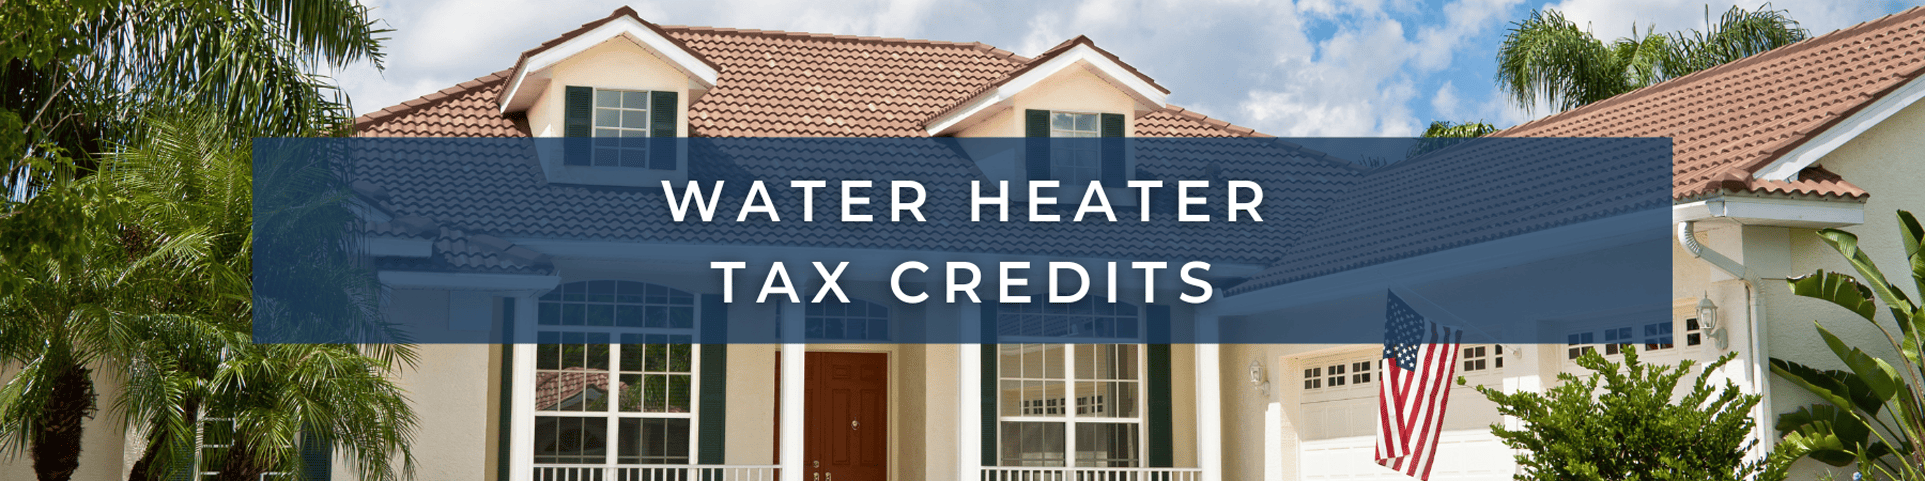 Water Heater Tax Credits